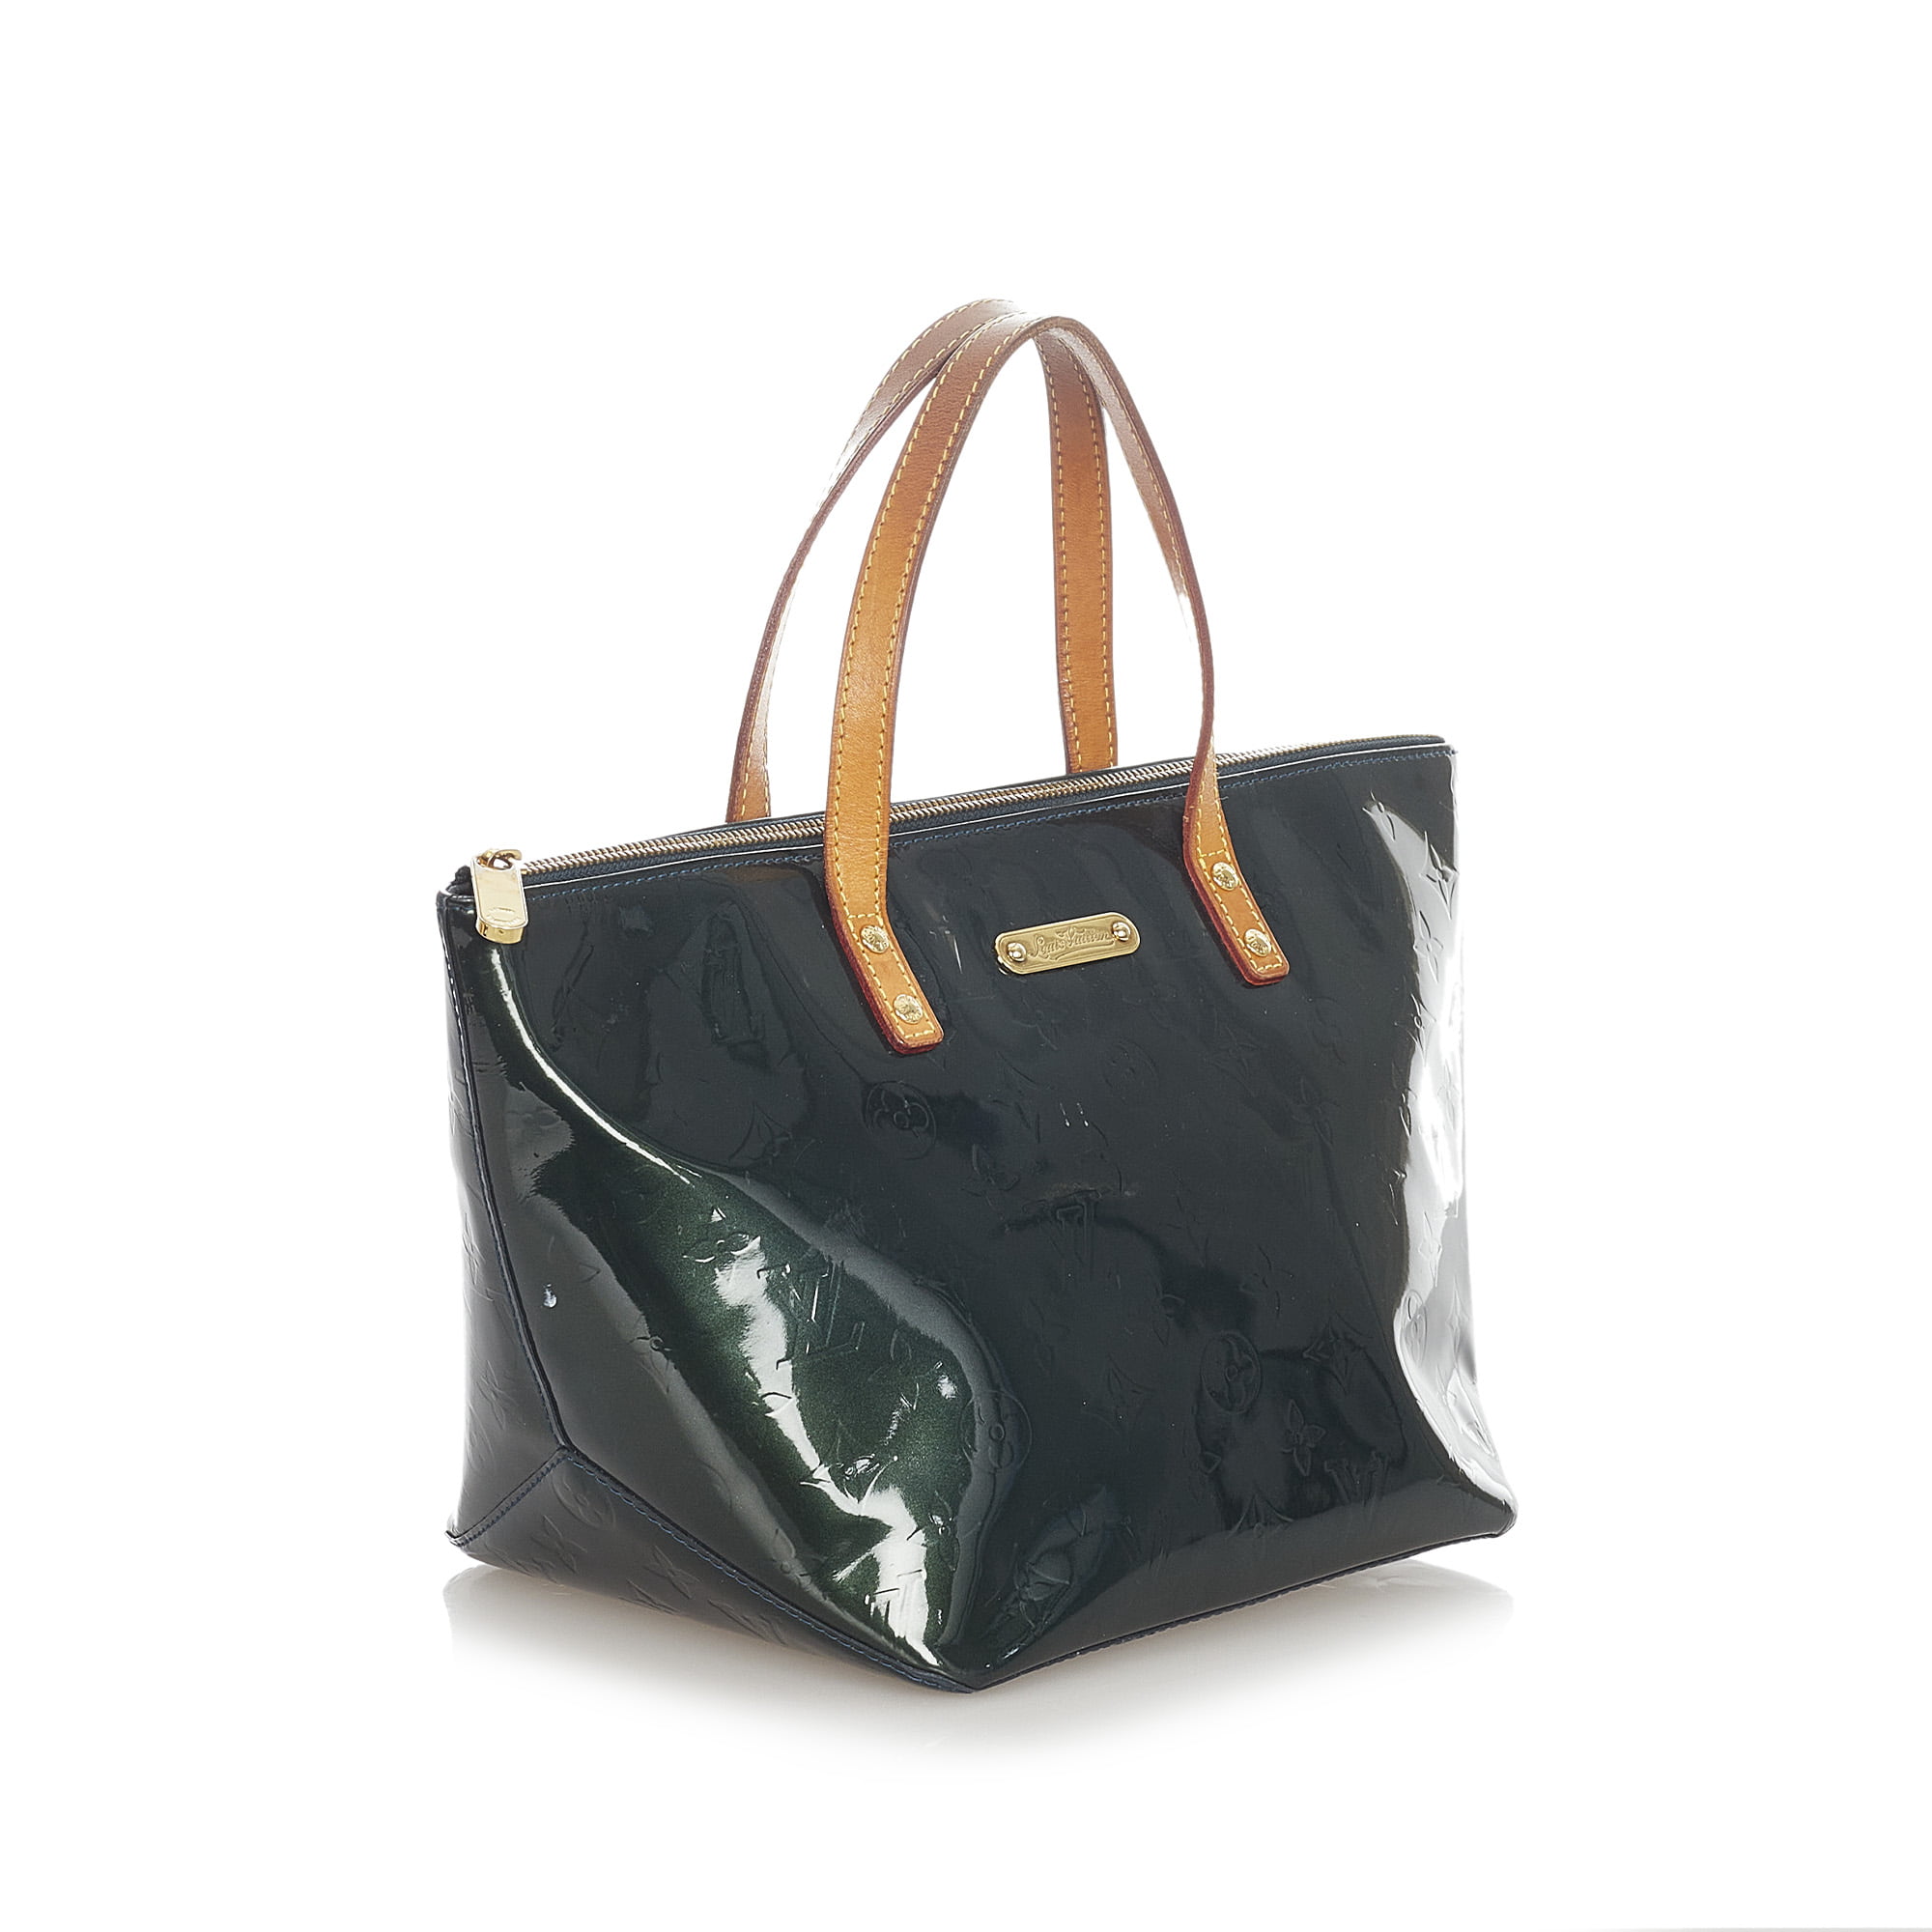 Green Louis Vuitton Vernis Bellevue PM Handbag